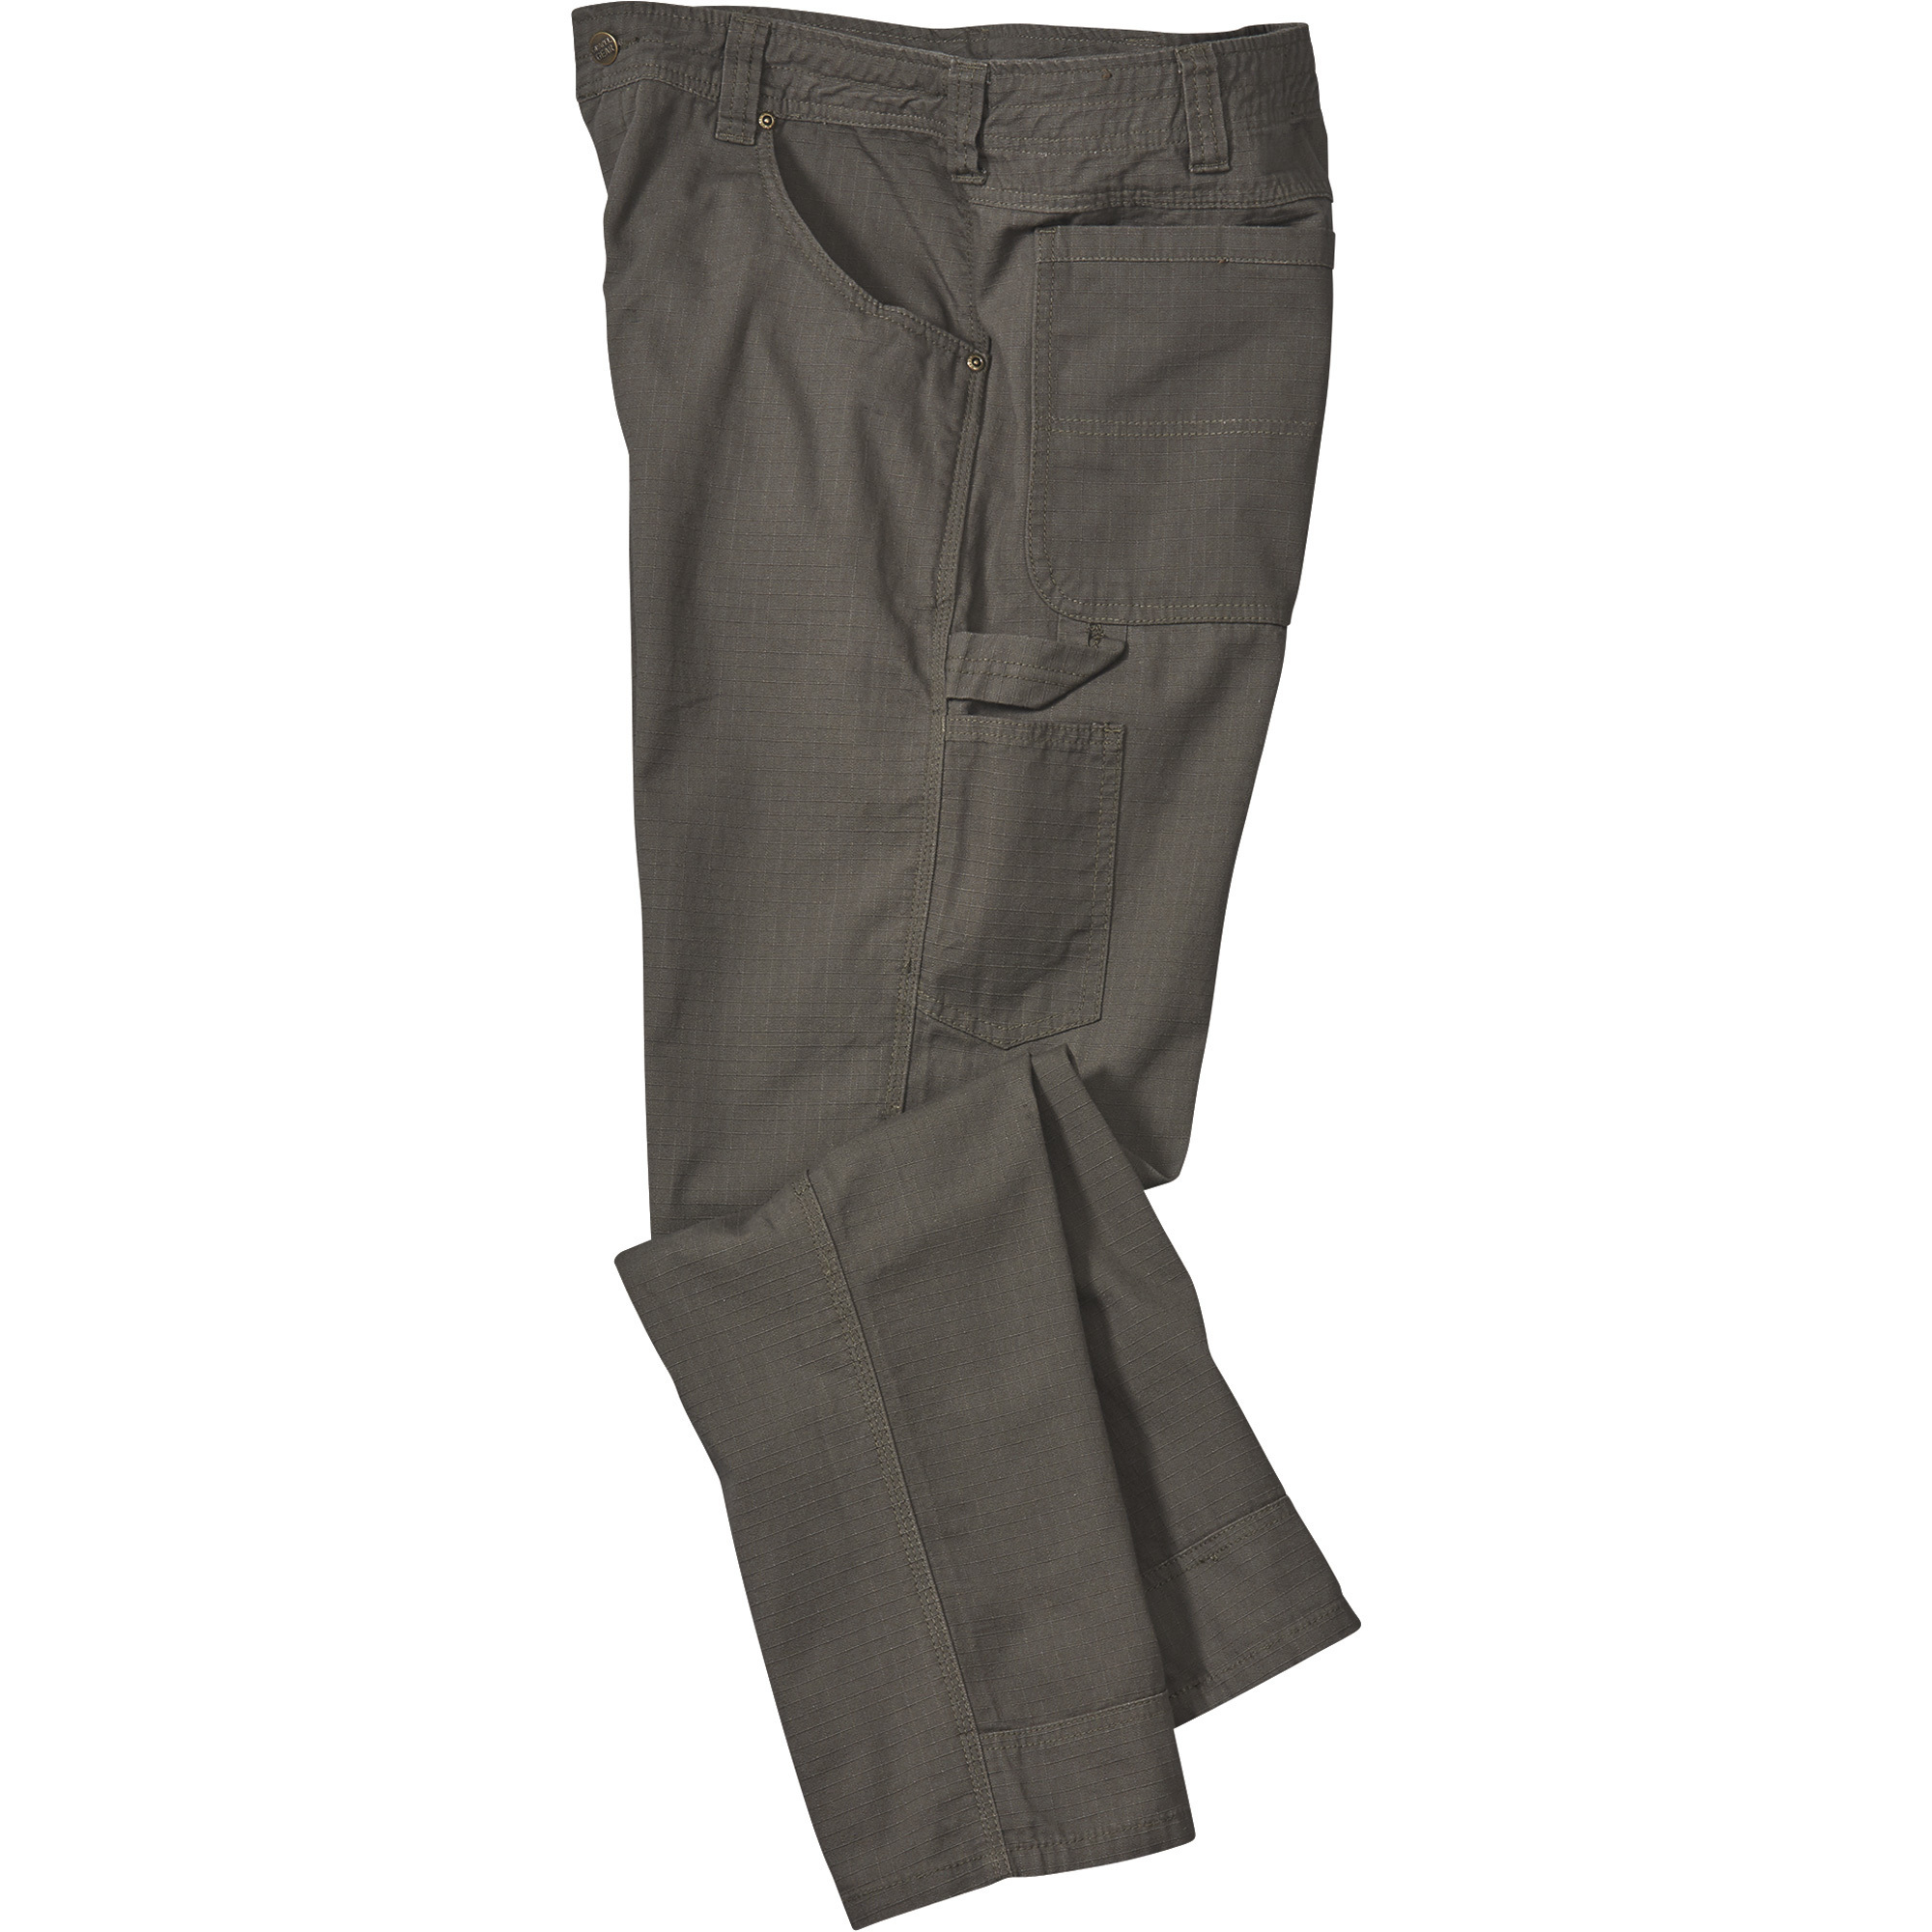 Gravel Gear Men's Cotton Ripstop Carpenter Pants with Teflon Fabric Protector â Moss, 44Inch Waist x 30Inch Inseam